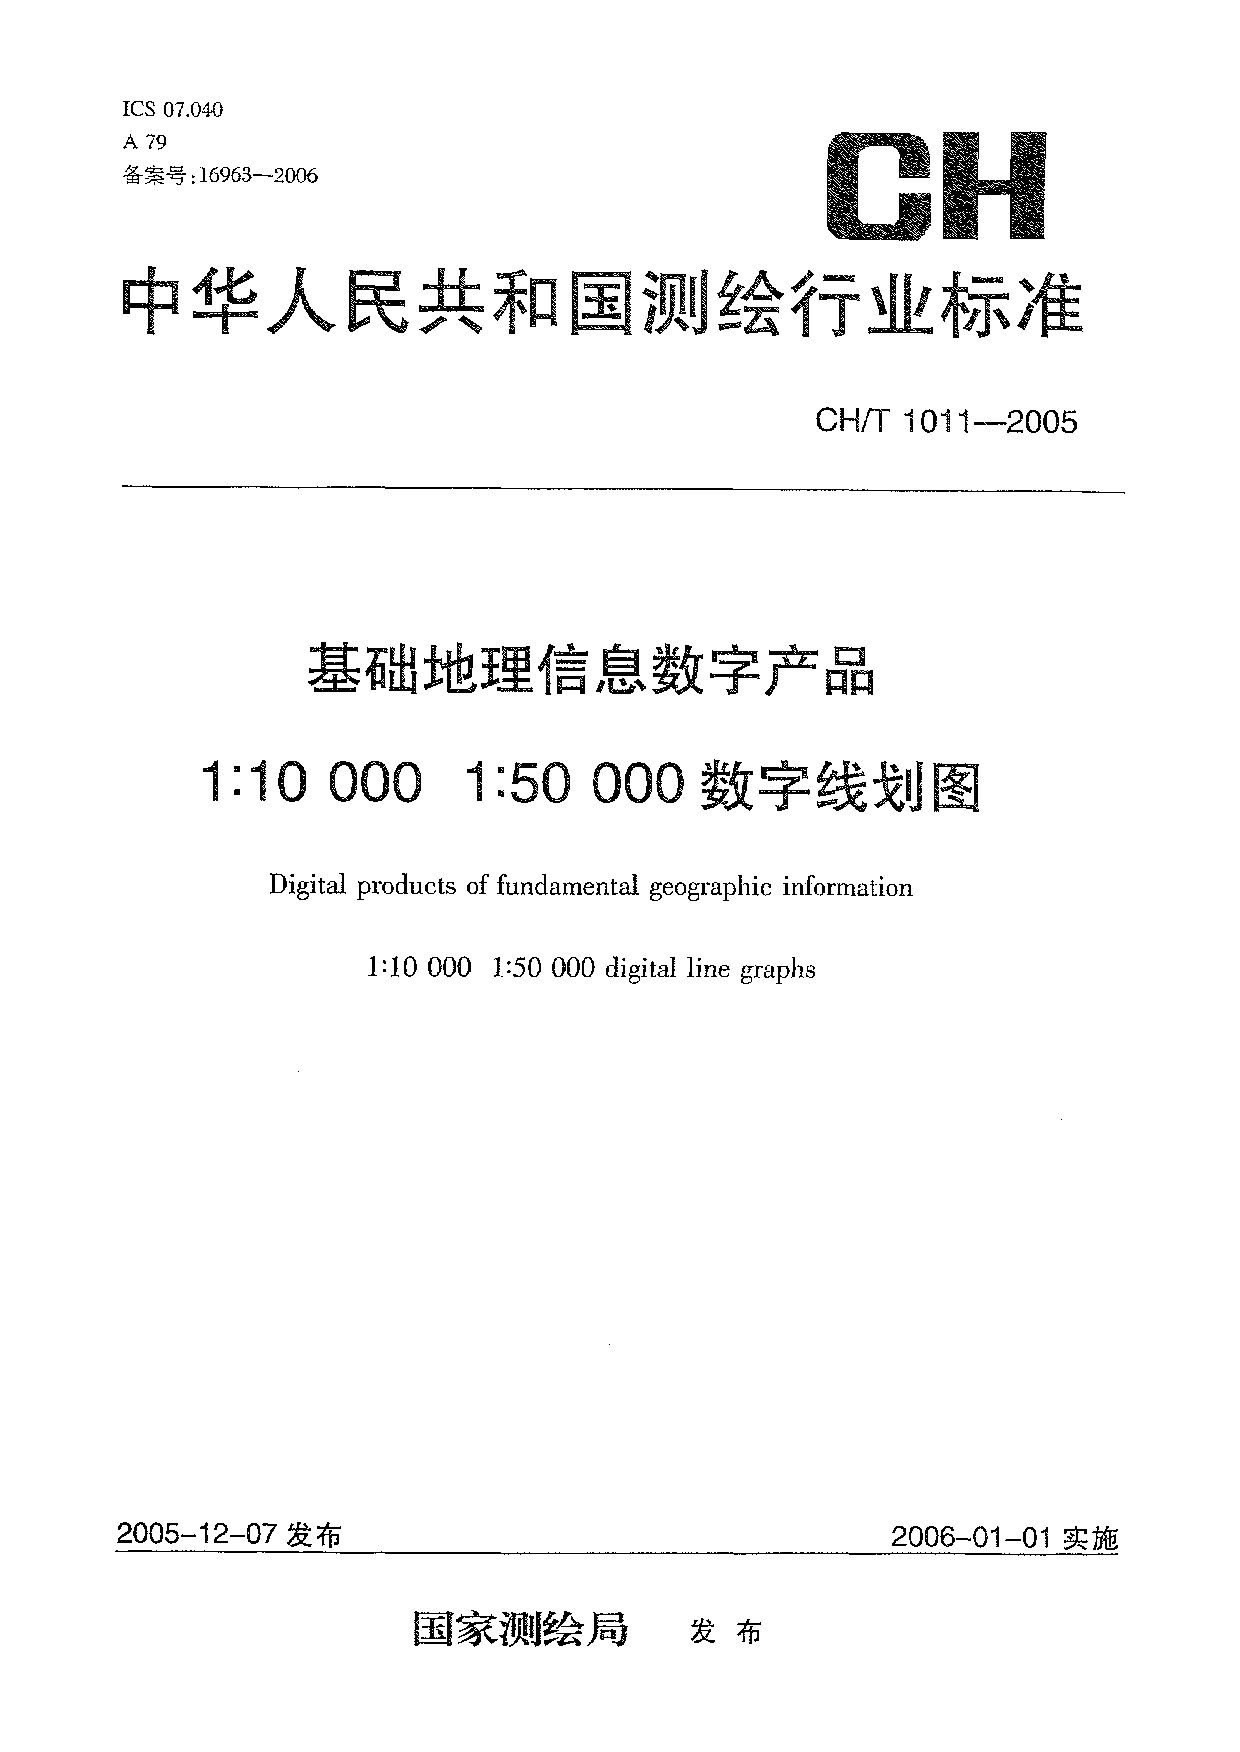 CH/T 1011-2005封面图